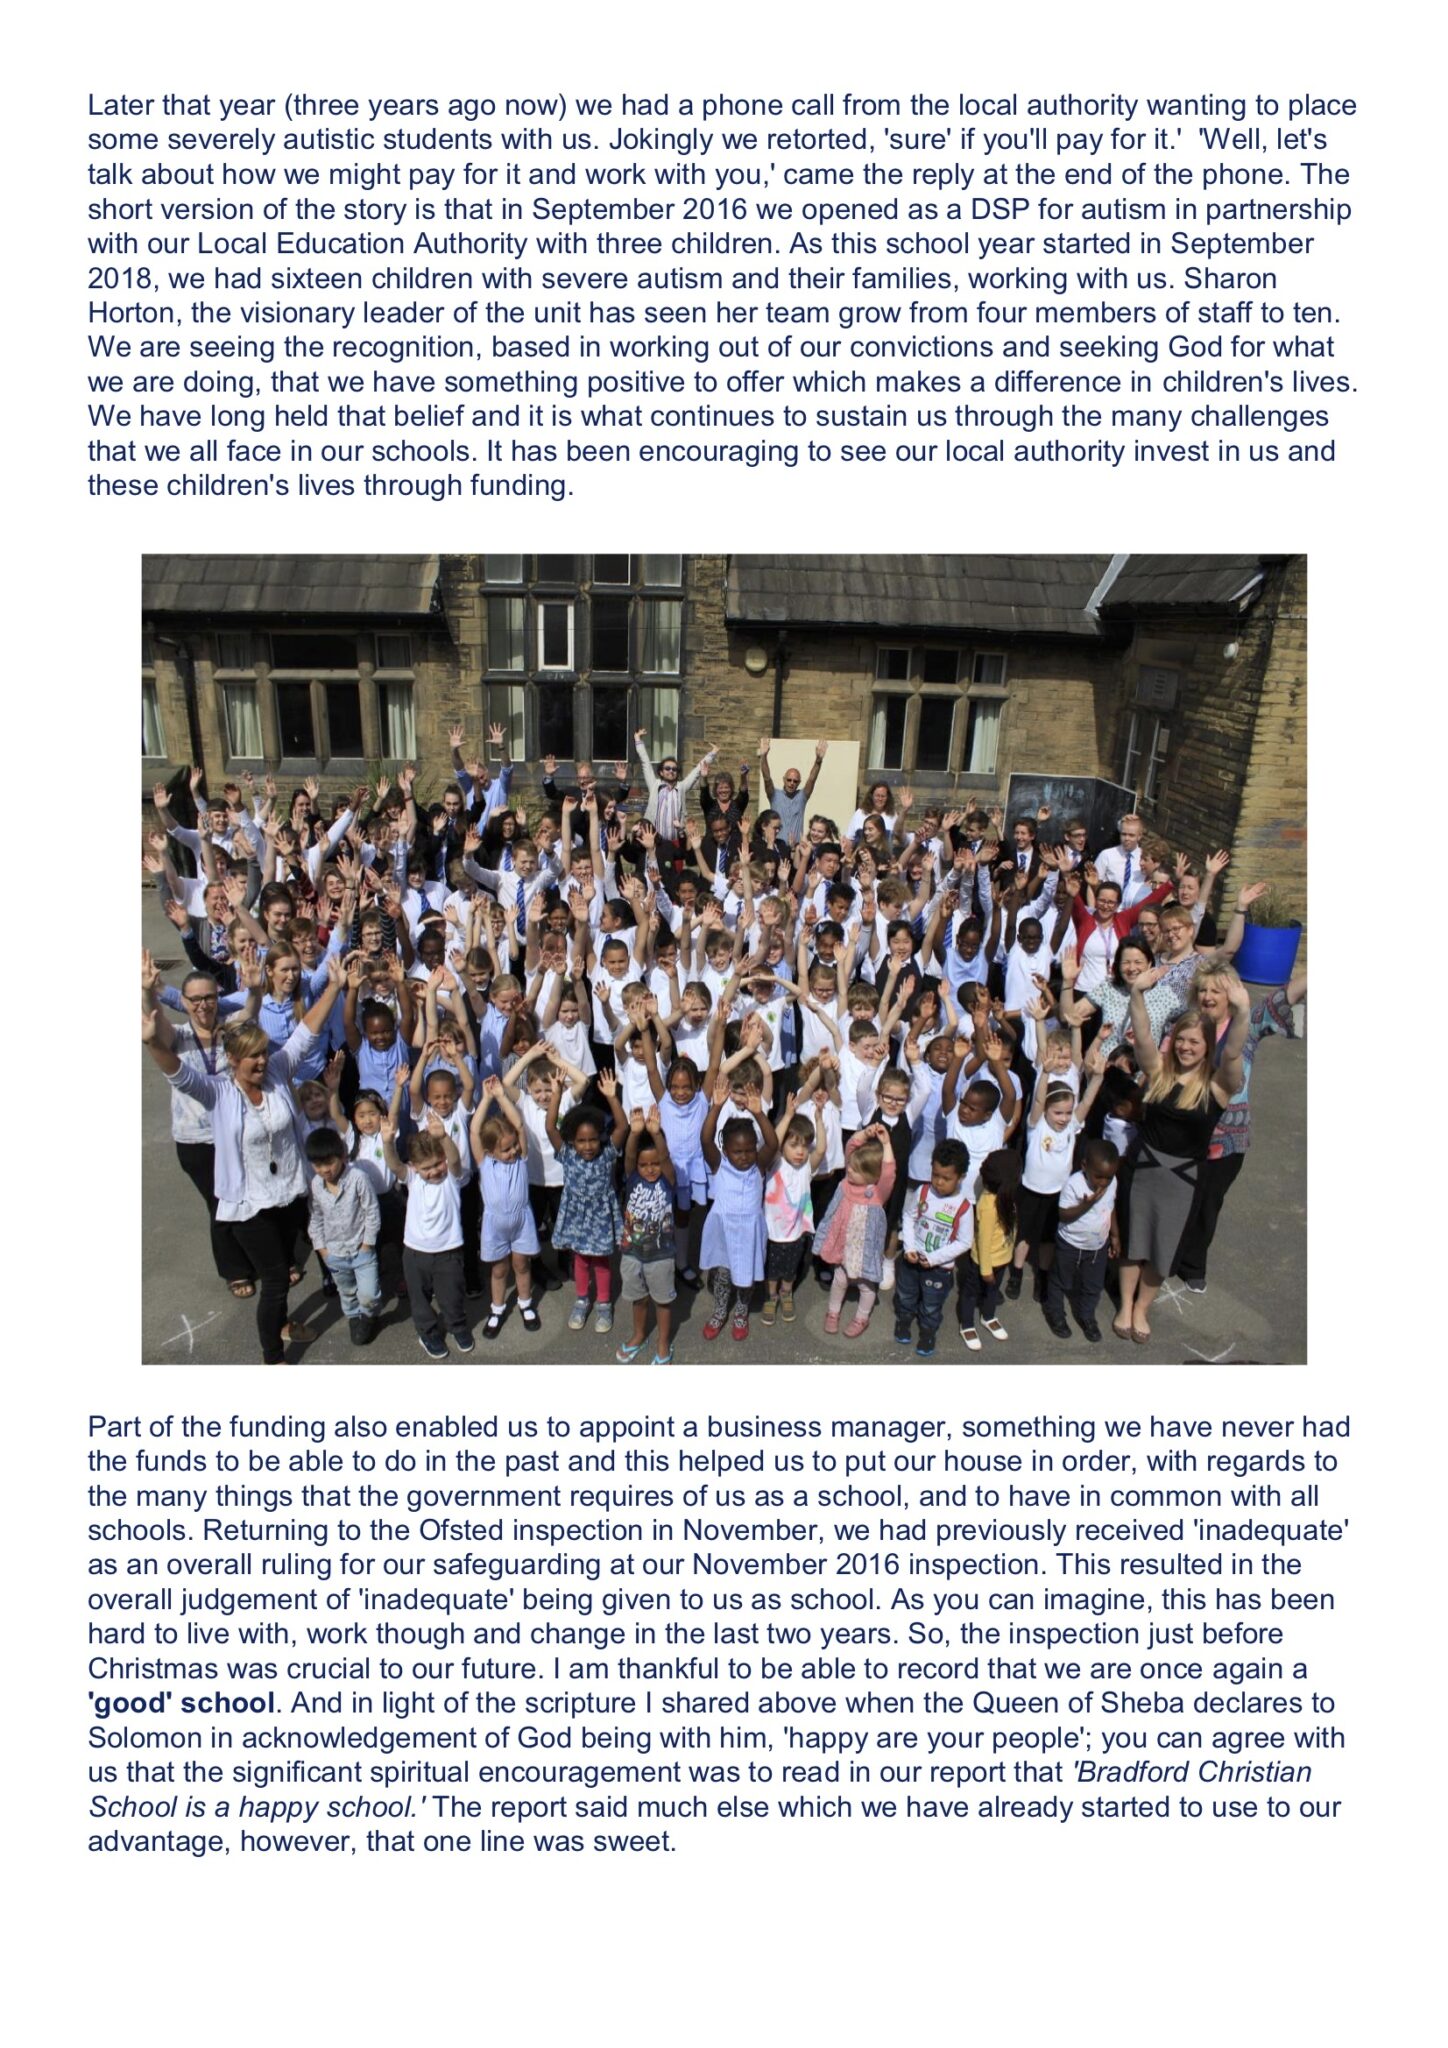 Bradford Christian School - 25 Year Celebration3